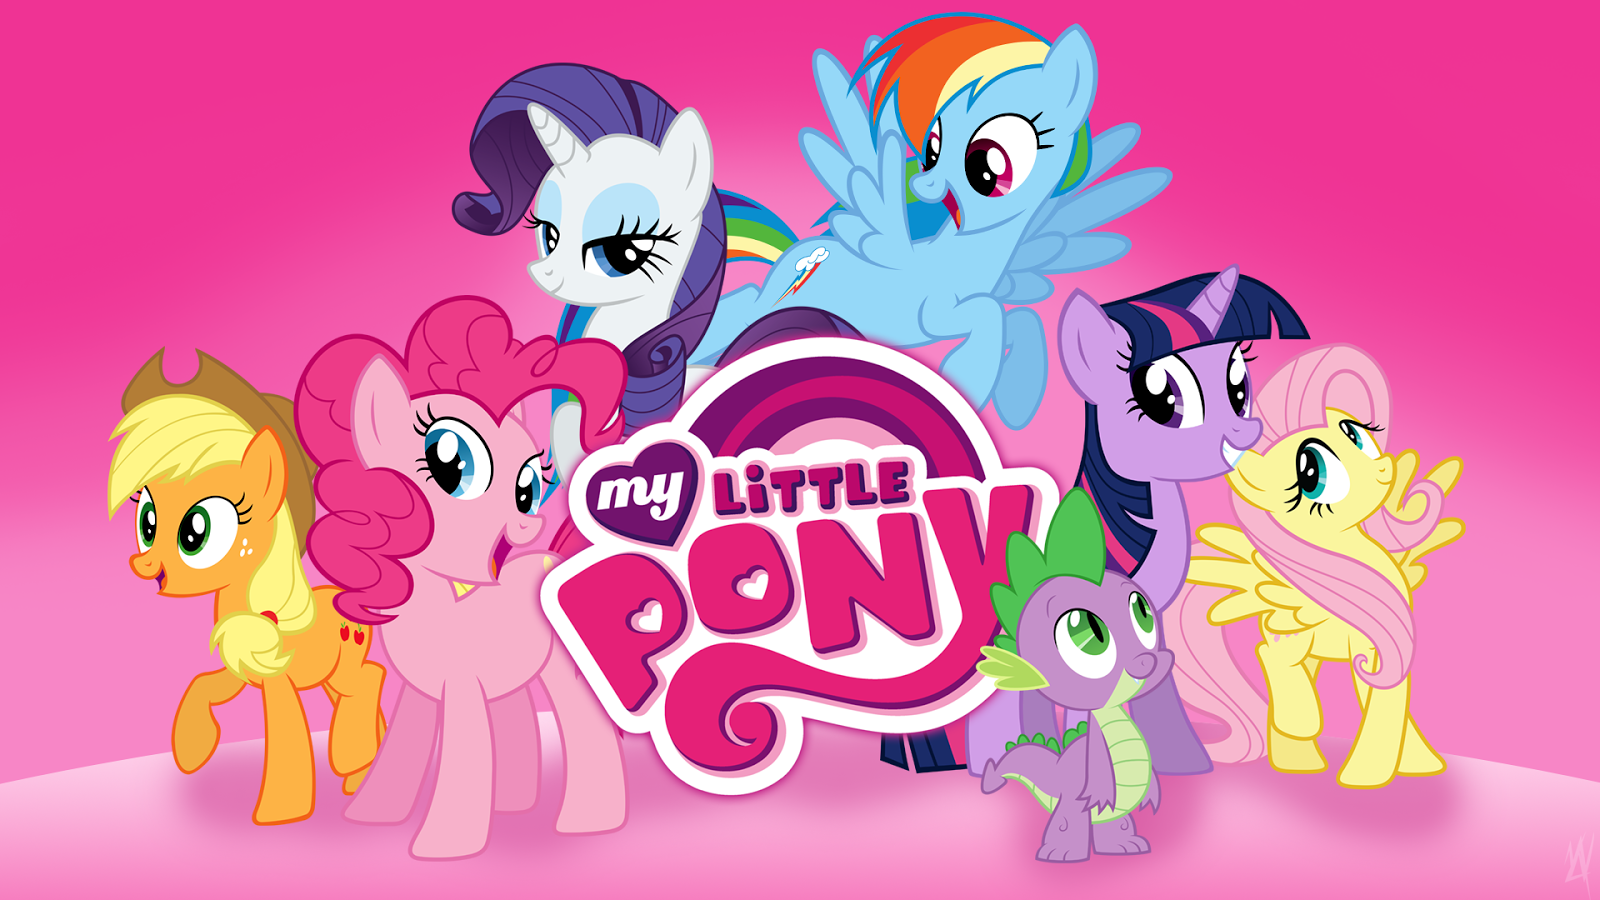 My+little+pony+logo+ponyville+review+blo